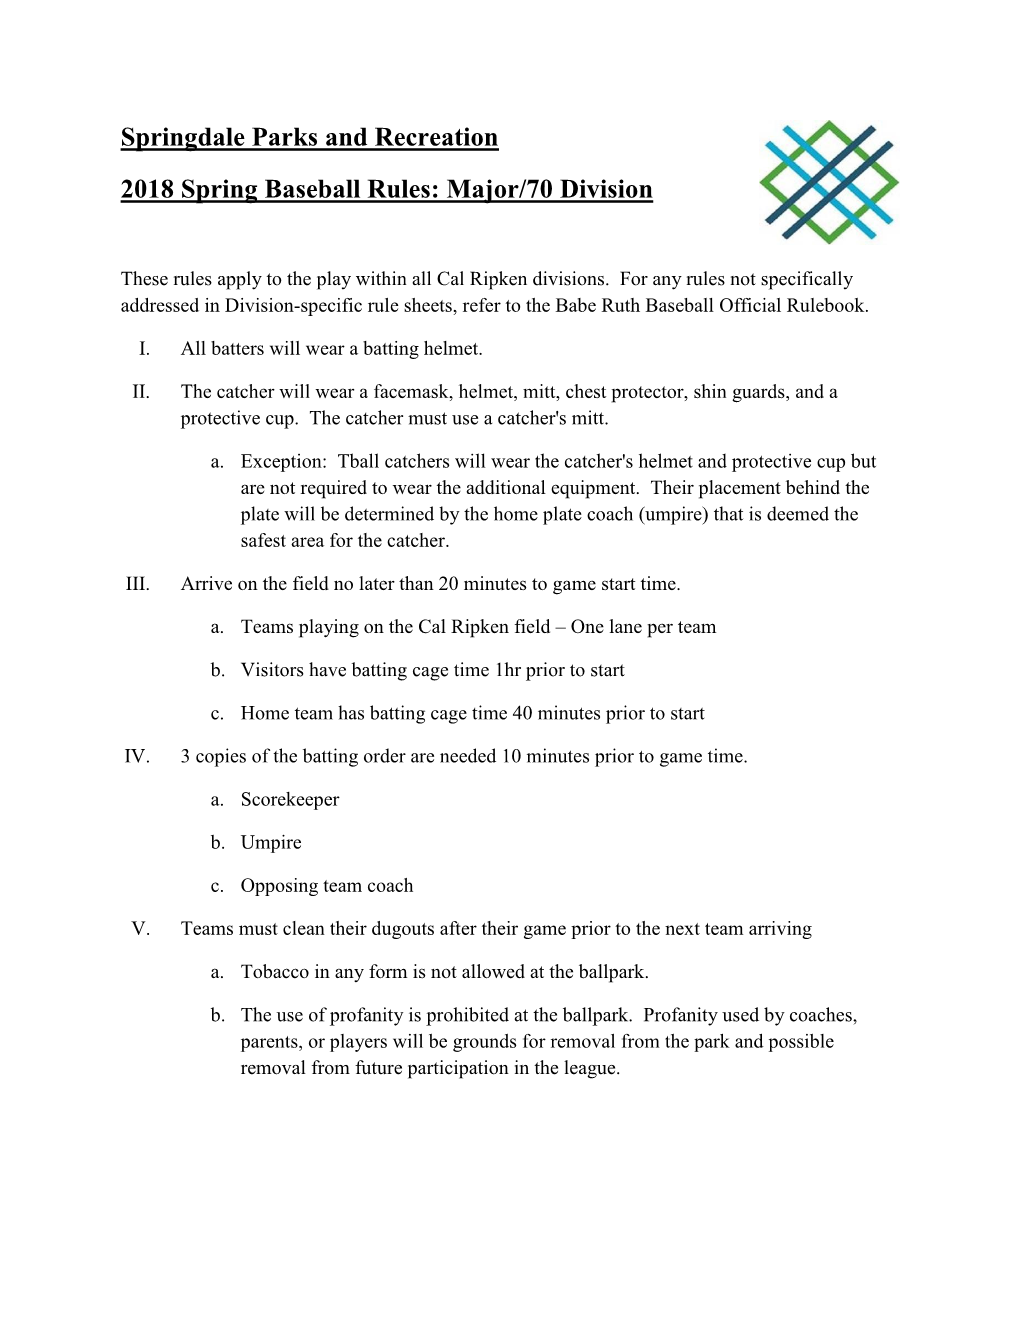 Springdale Parks and Recreation 2018 Spring Baseball Rules: Major